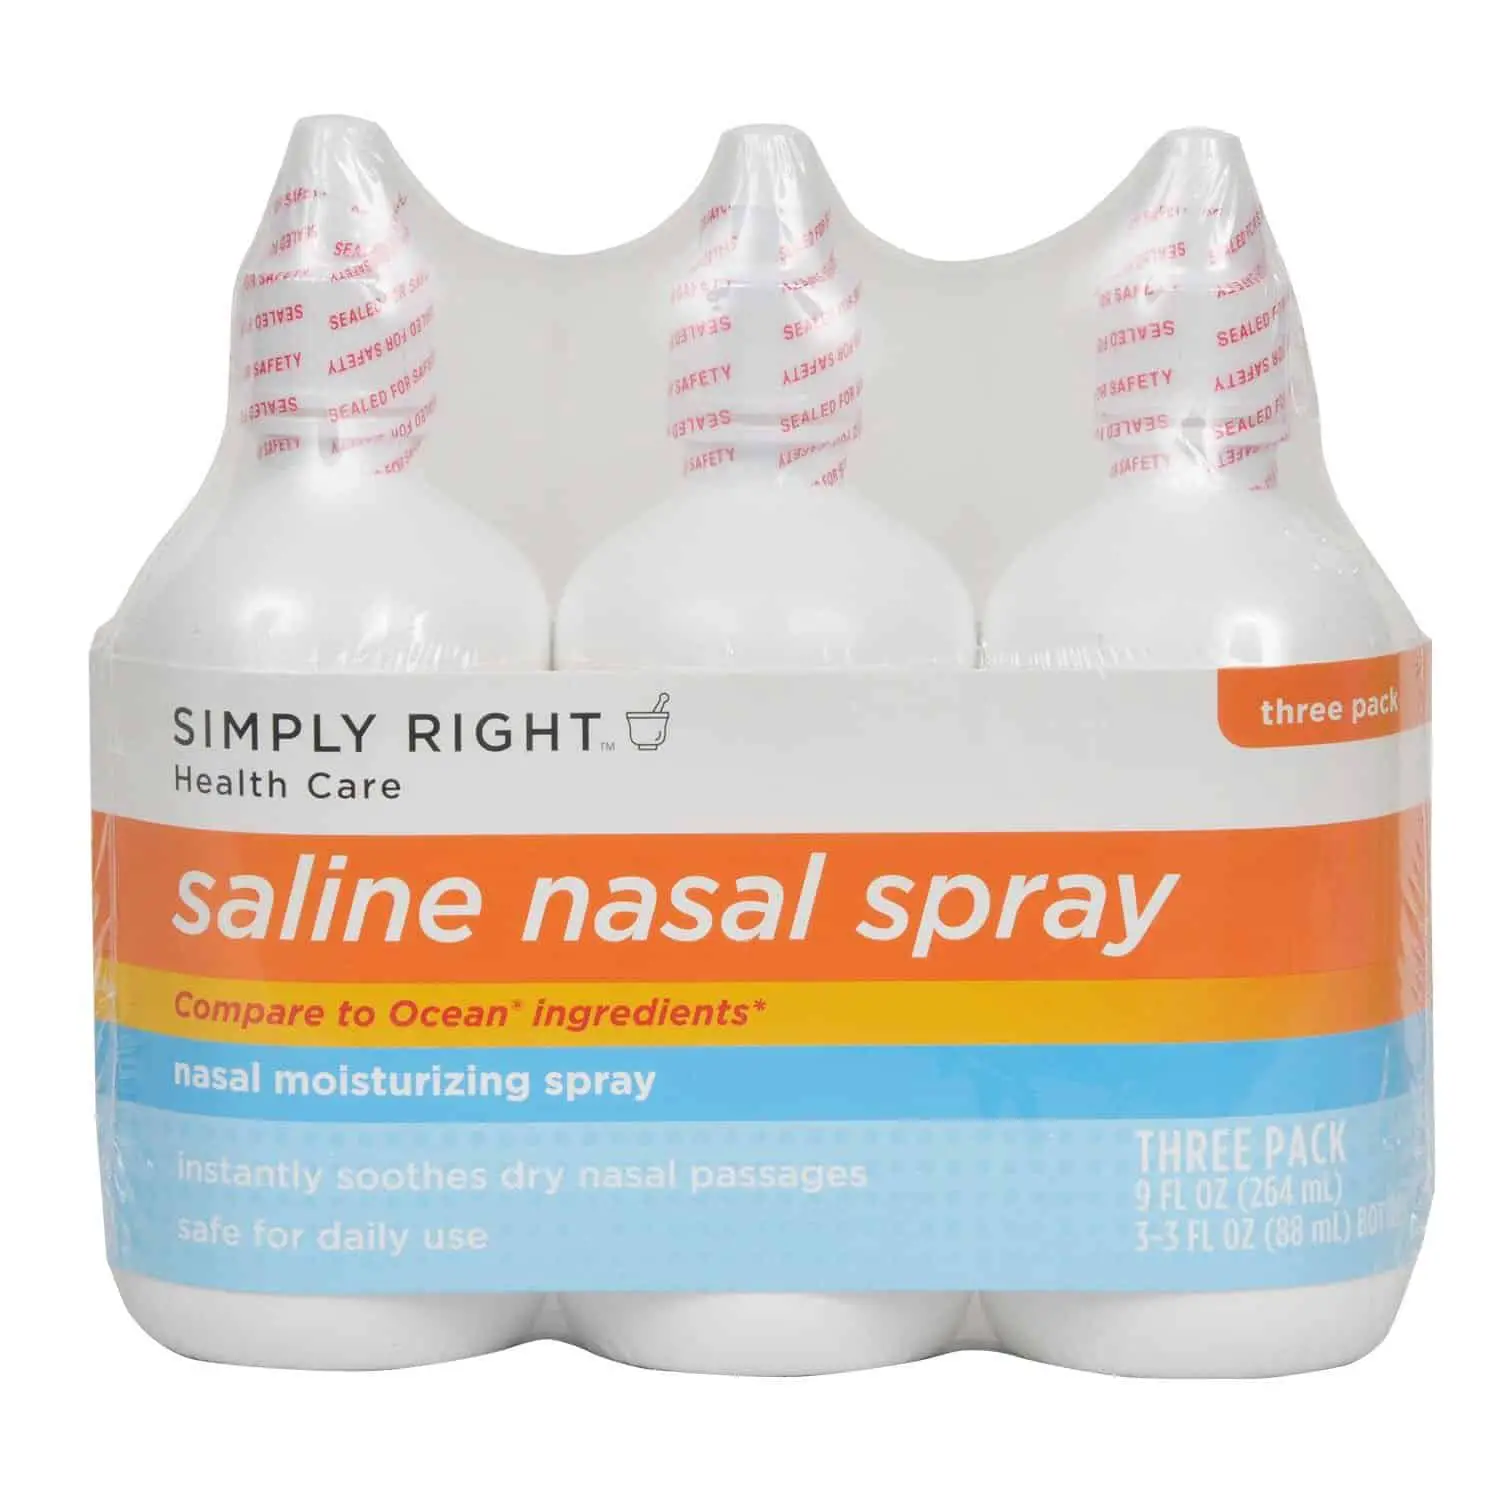 emilyyoungdesigns: Allergy Nasal Spray During Pregnancy